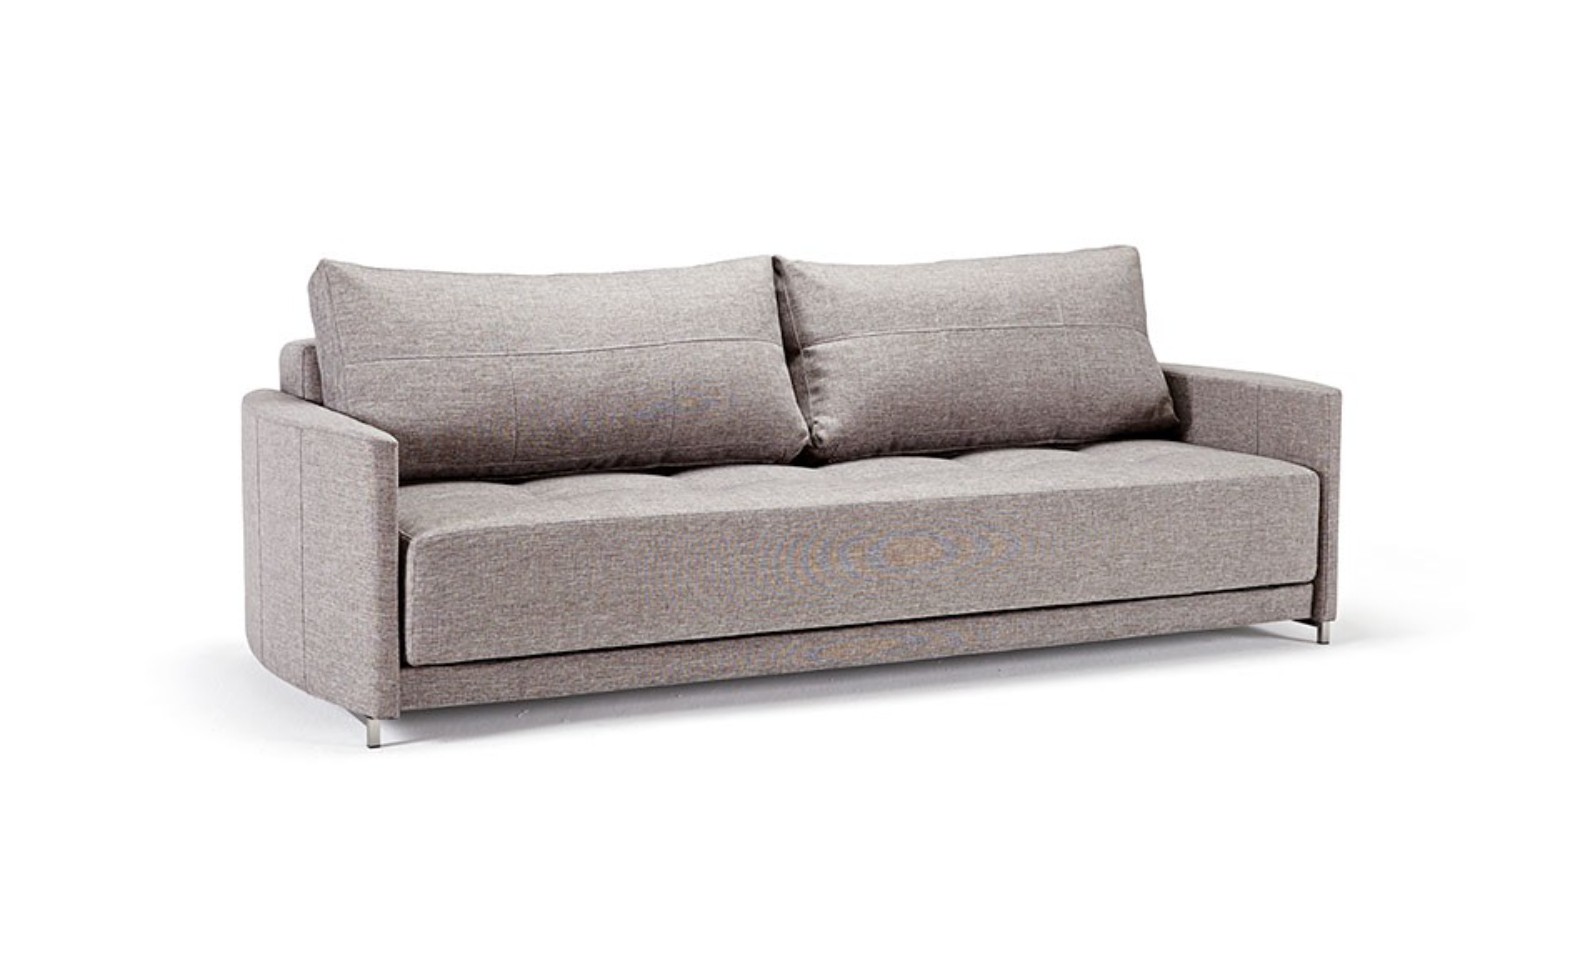 Trundle sofa